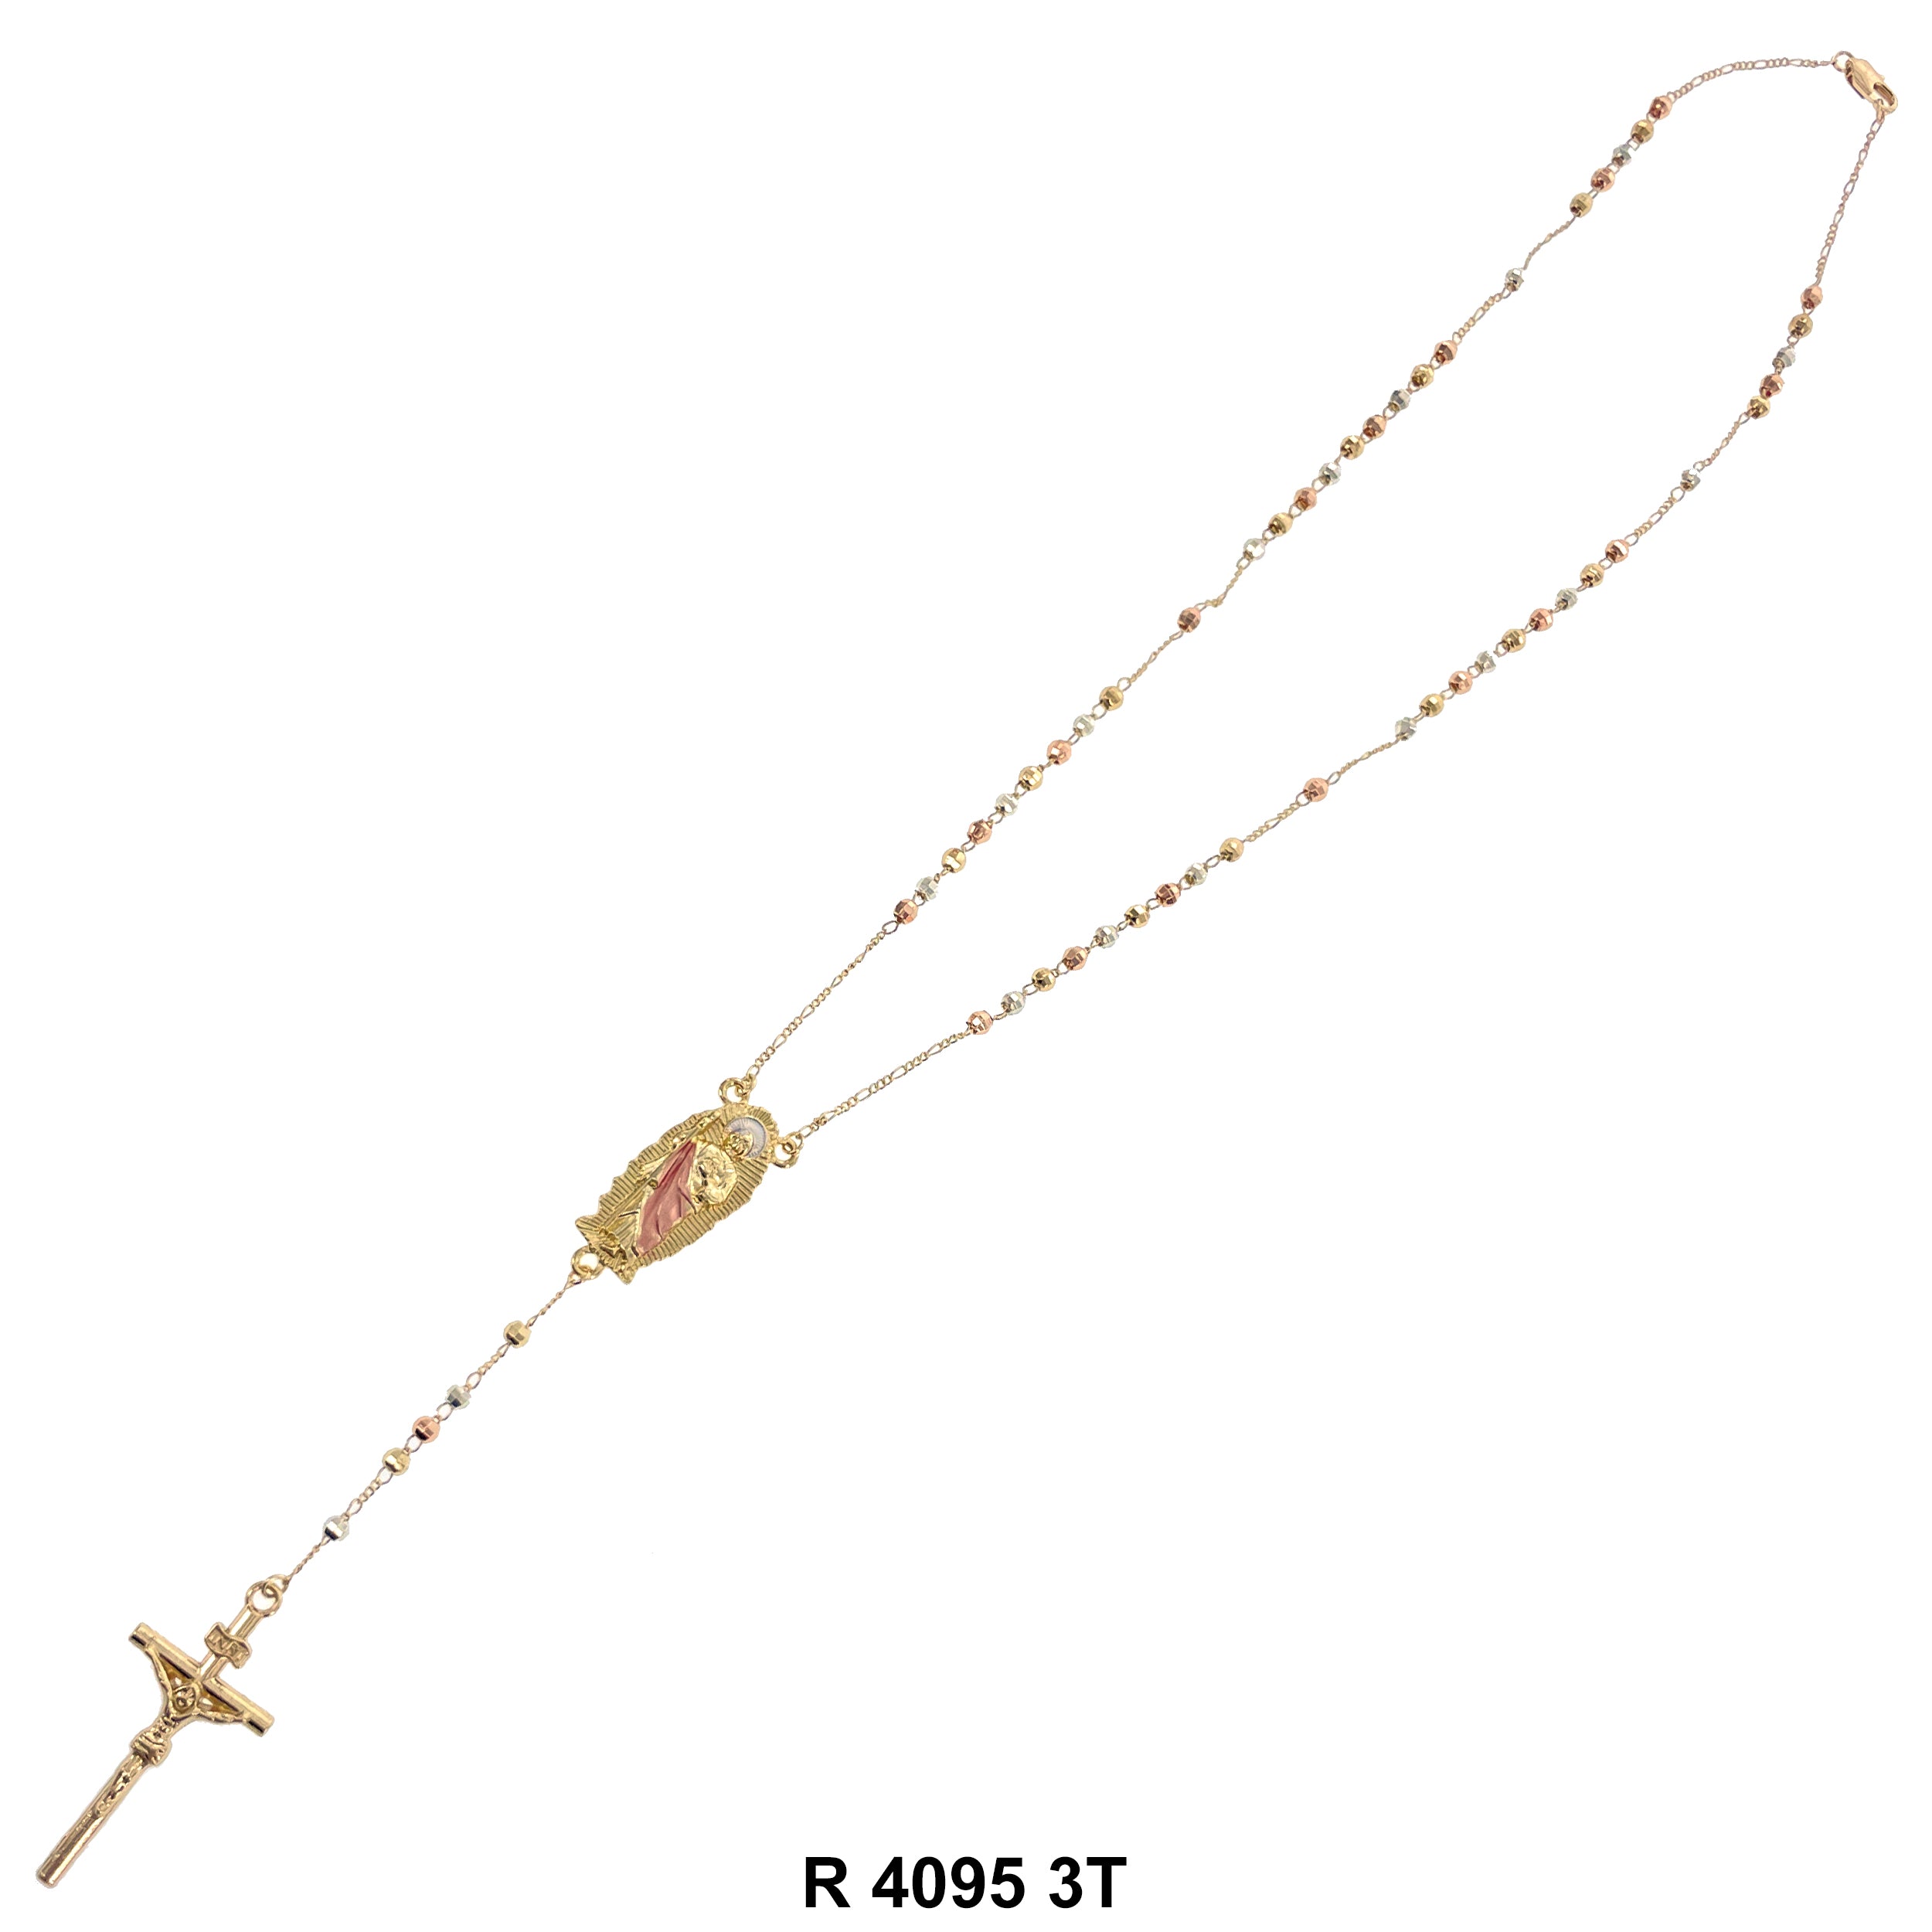 4 MM San Judas Disco Ball Beads Rosary R 4095 3T